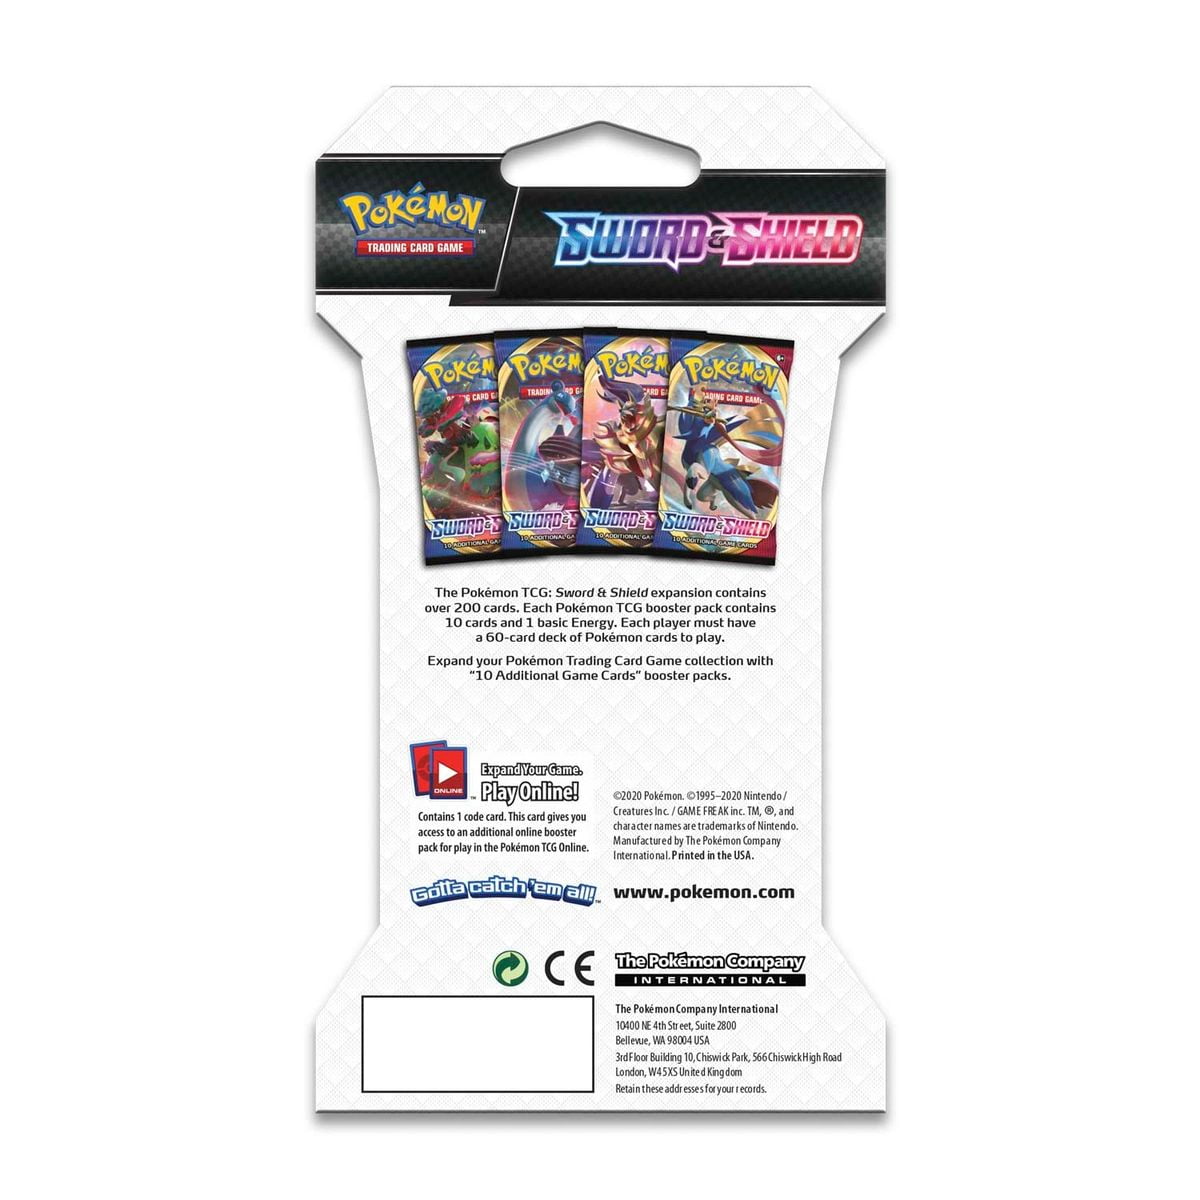 Pokémon Sword & Pokémon Shield by The Pokémon Company International